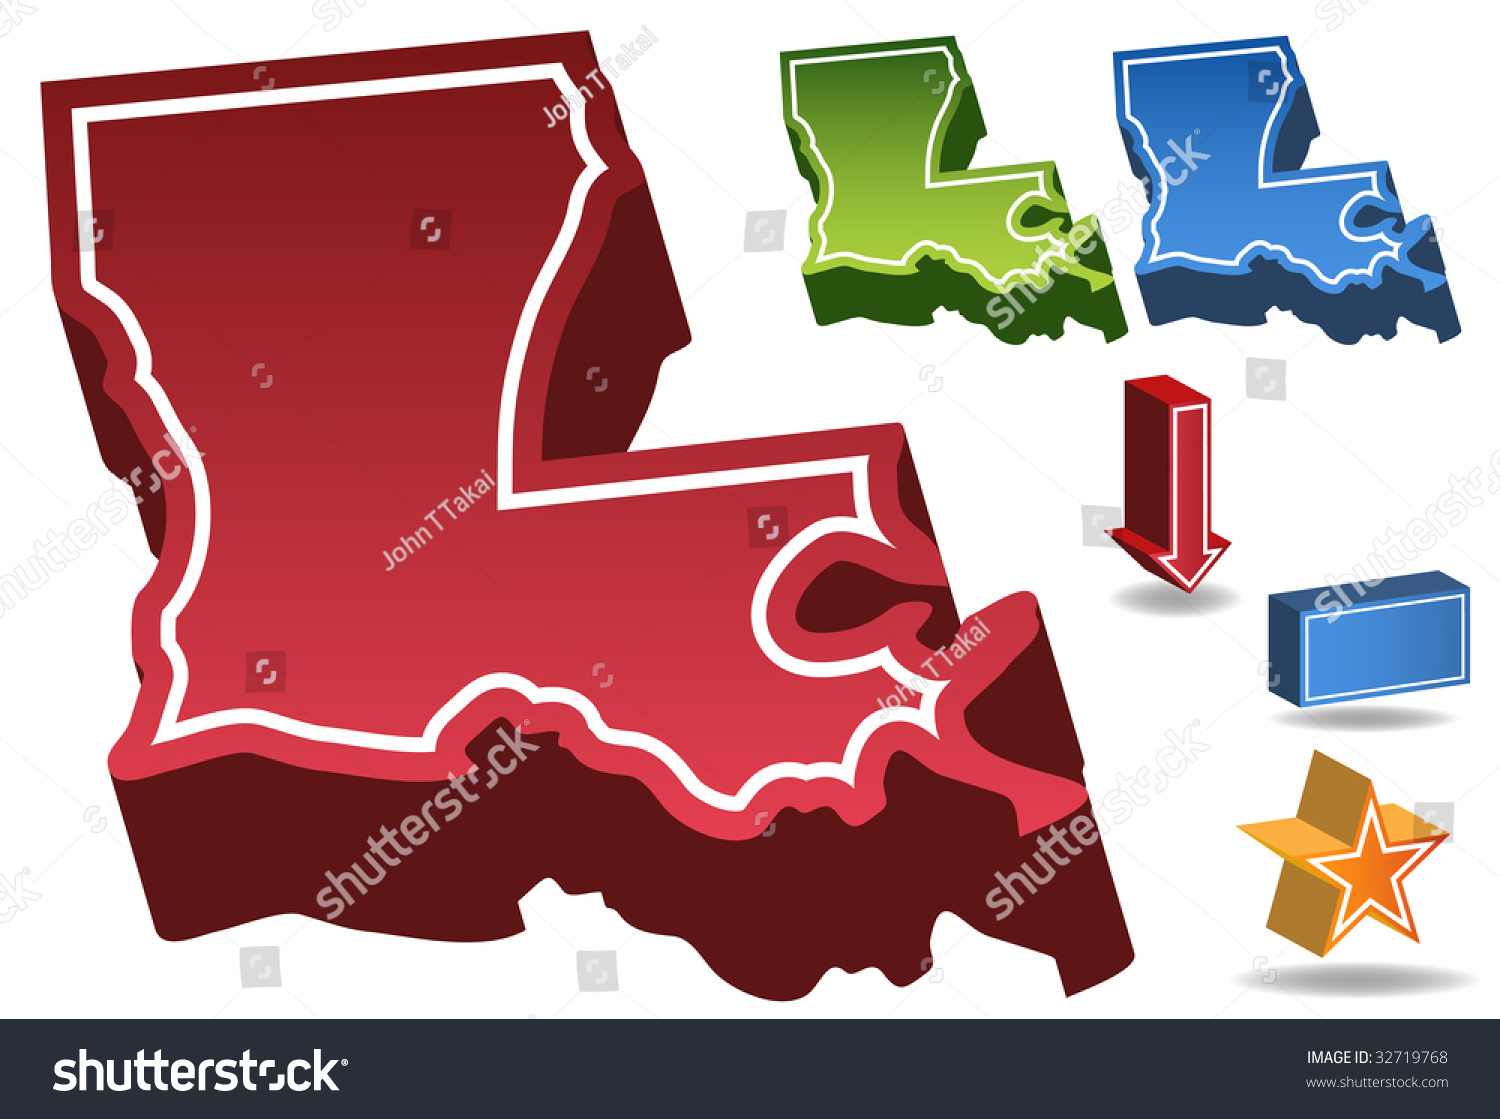 Louisiana State Stock Photo 32719768 : Shutterstock